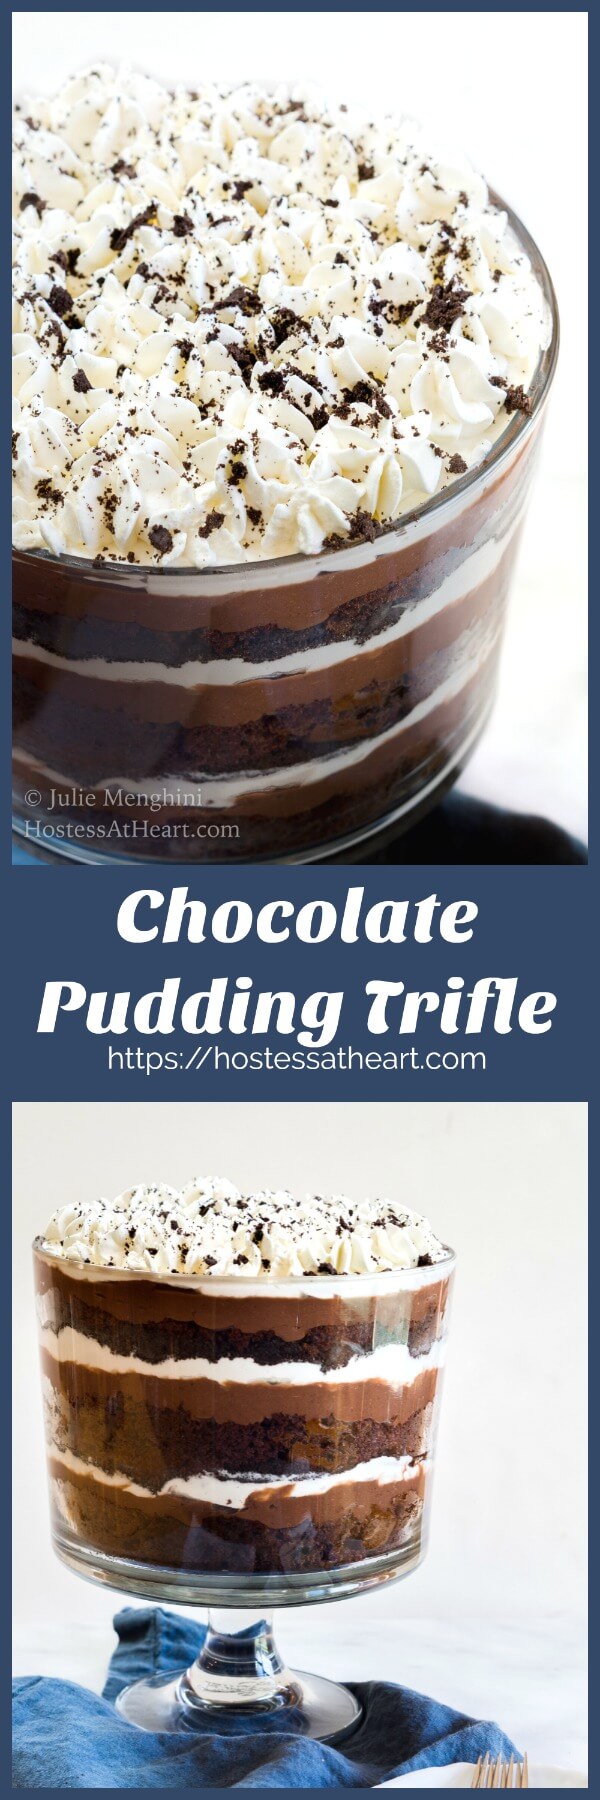 Chocolate Pudding Trifle Dessert Recipe | Hostess At Heart